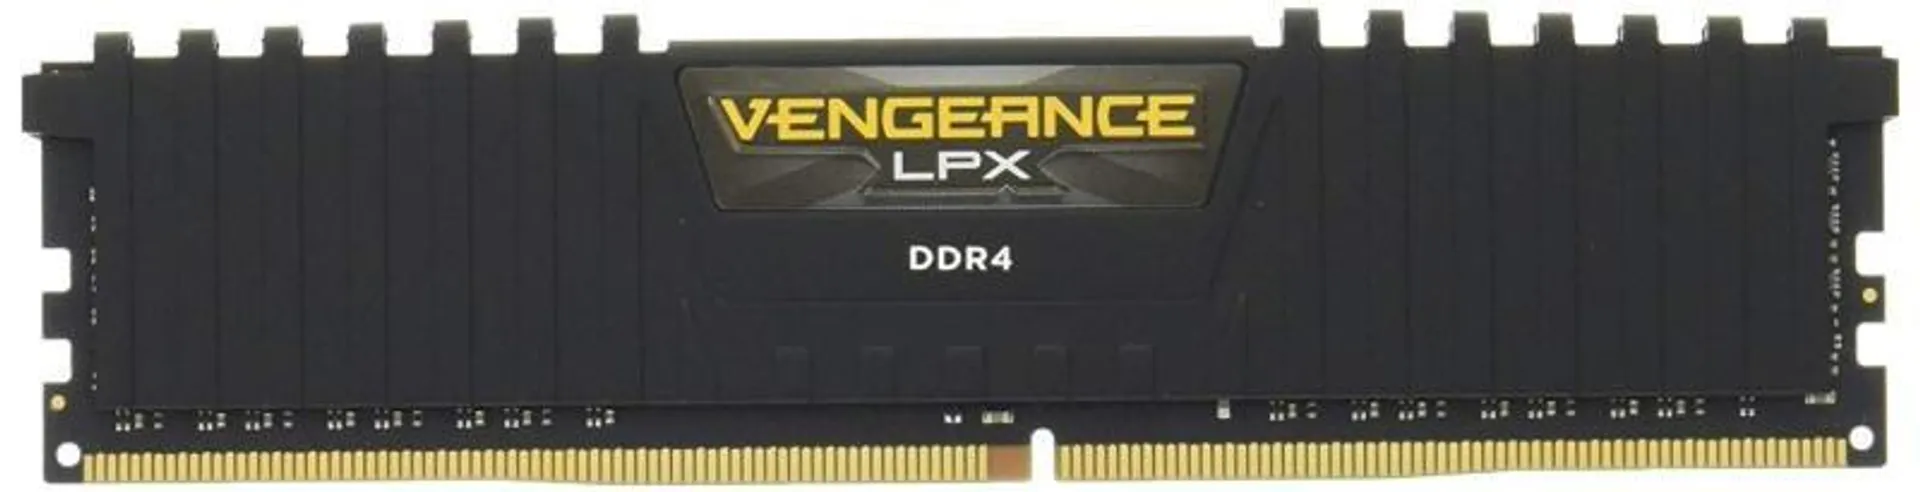 Corsair Vengeance LPX 8GB DDR4 2400MHz 1.2v DIMM Memory Module